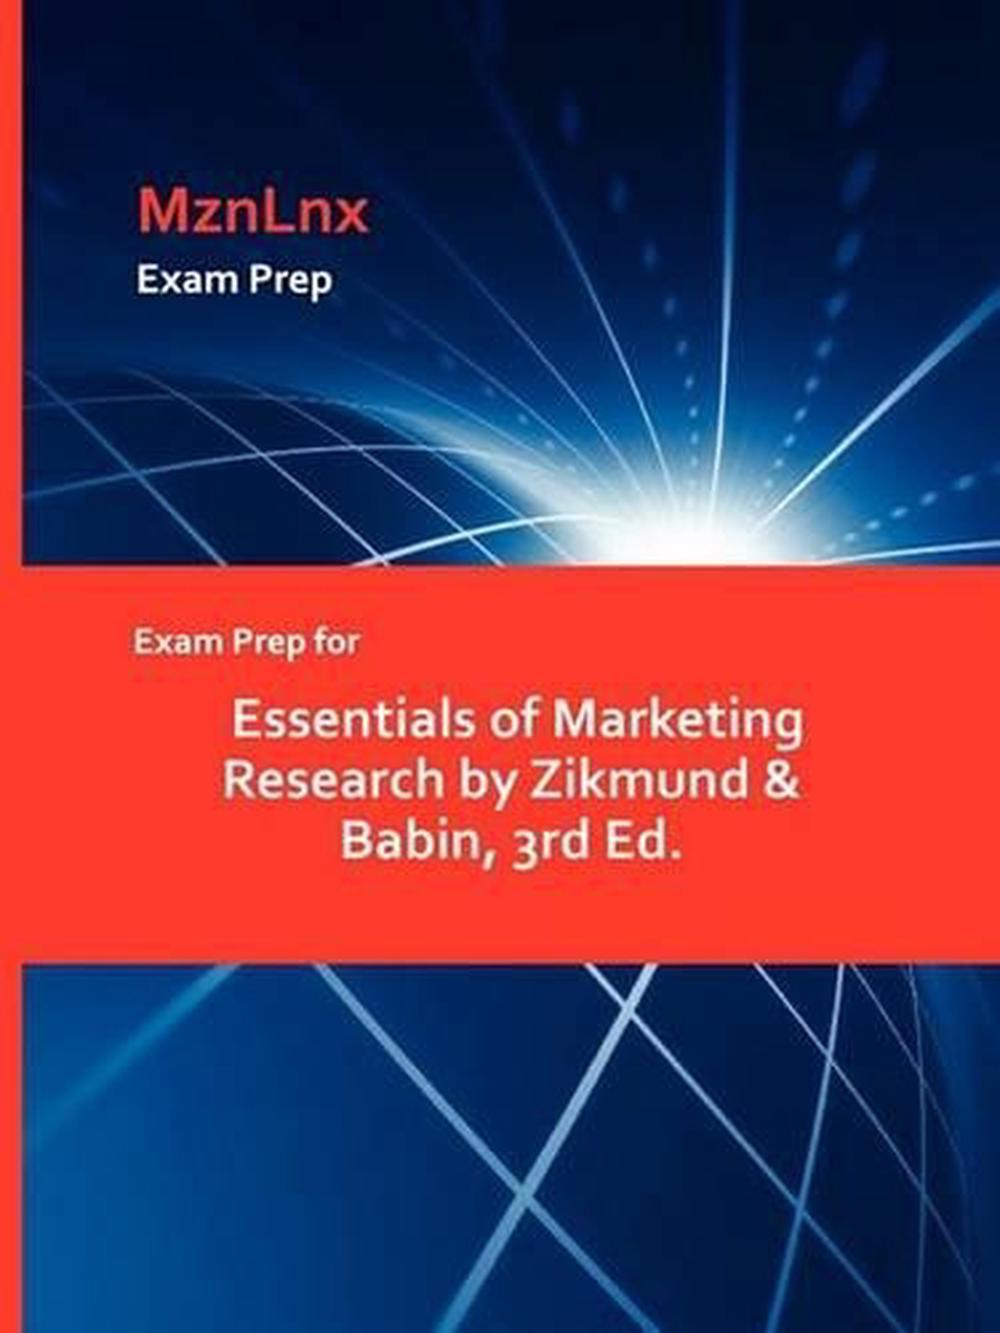 Exam Prep for Essentials of Marketing Research by Zikmund & Babin, 3rd